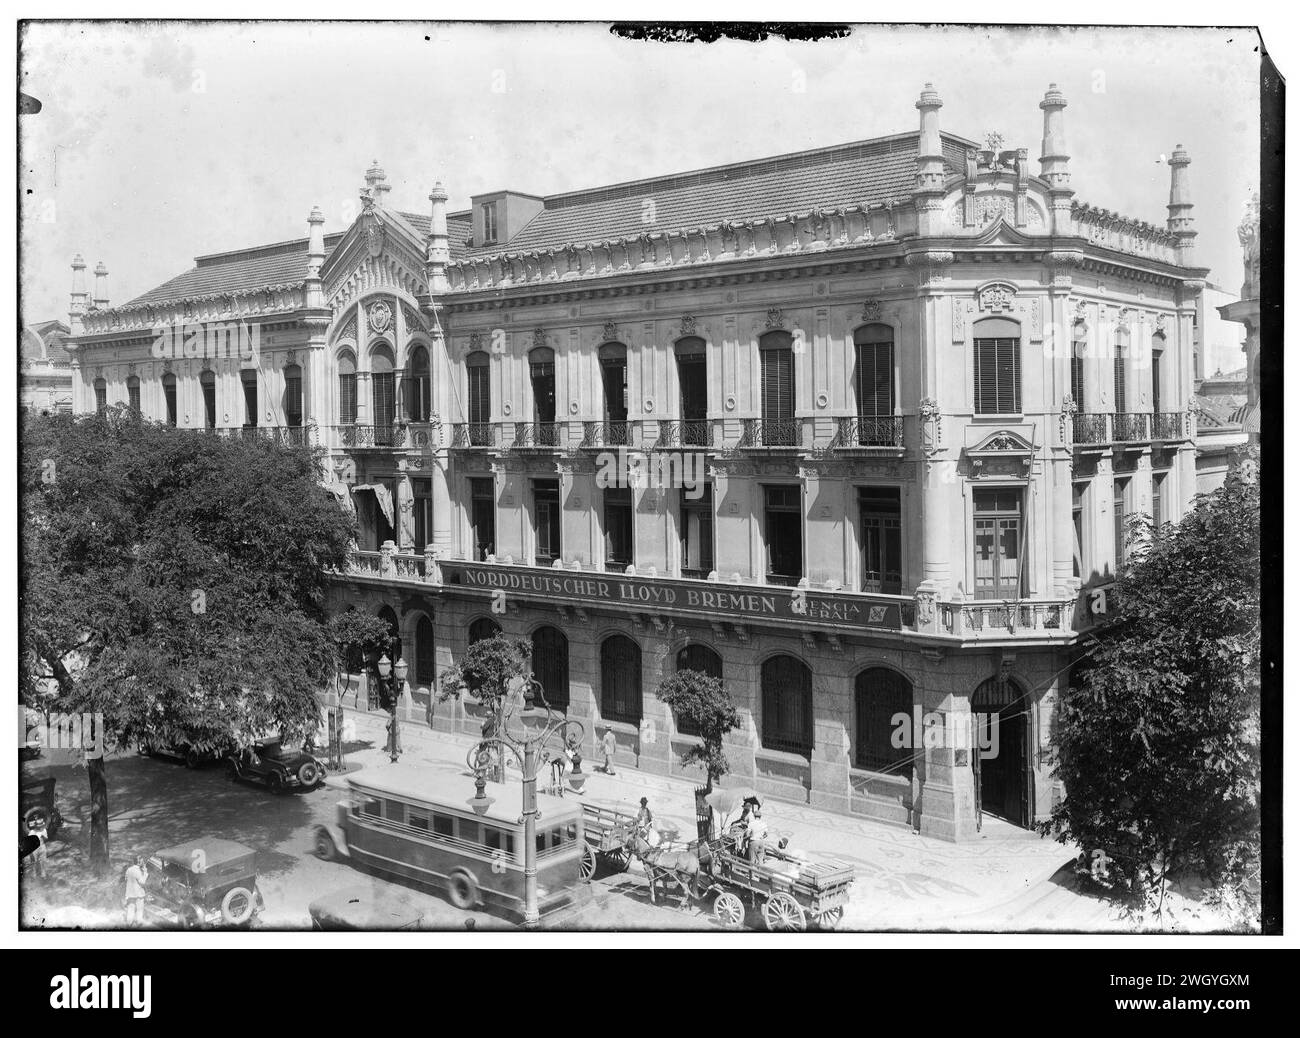 Avenida Rio Branco ; Edifício da Norddeutscher Lloyd Bremen (037SL03059). Banque D'Images